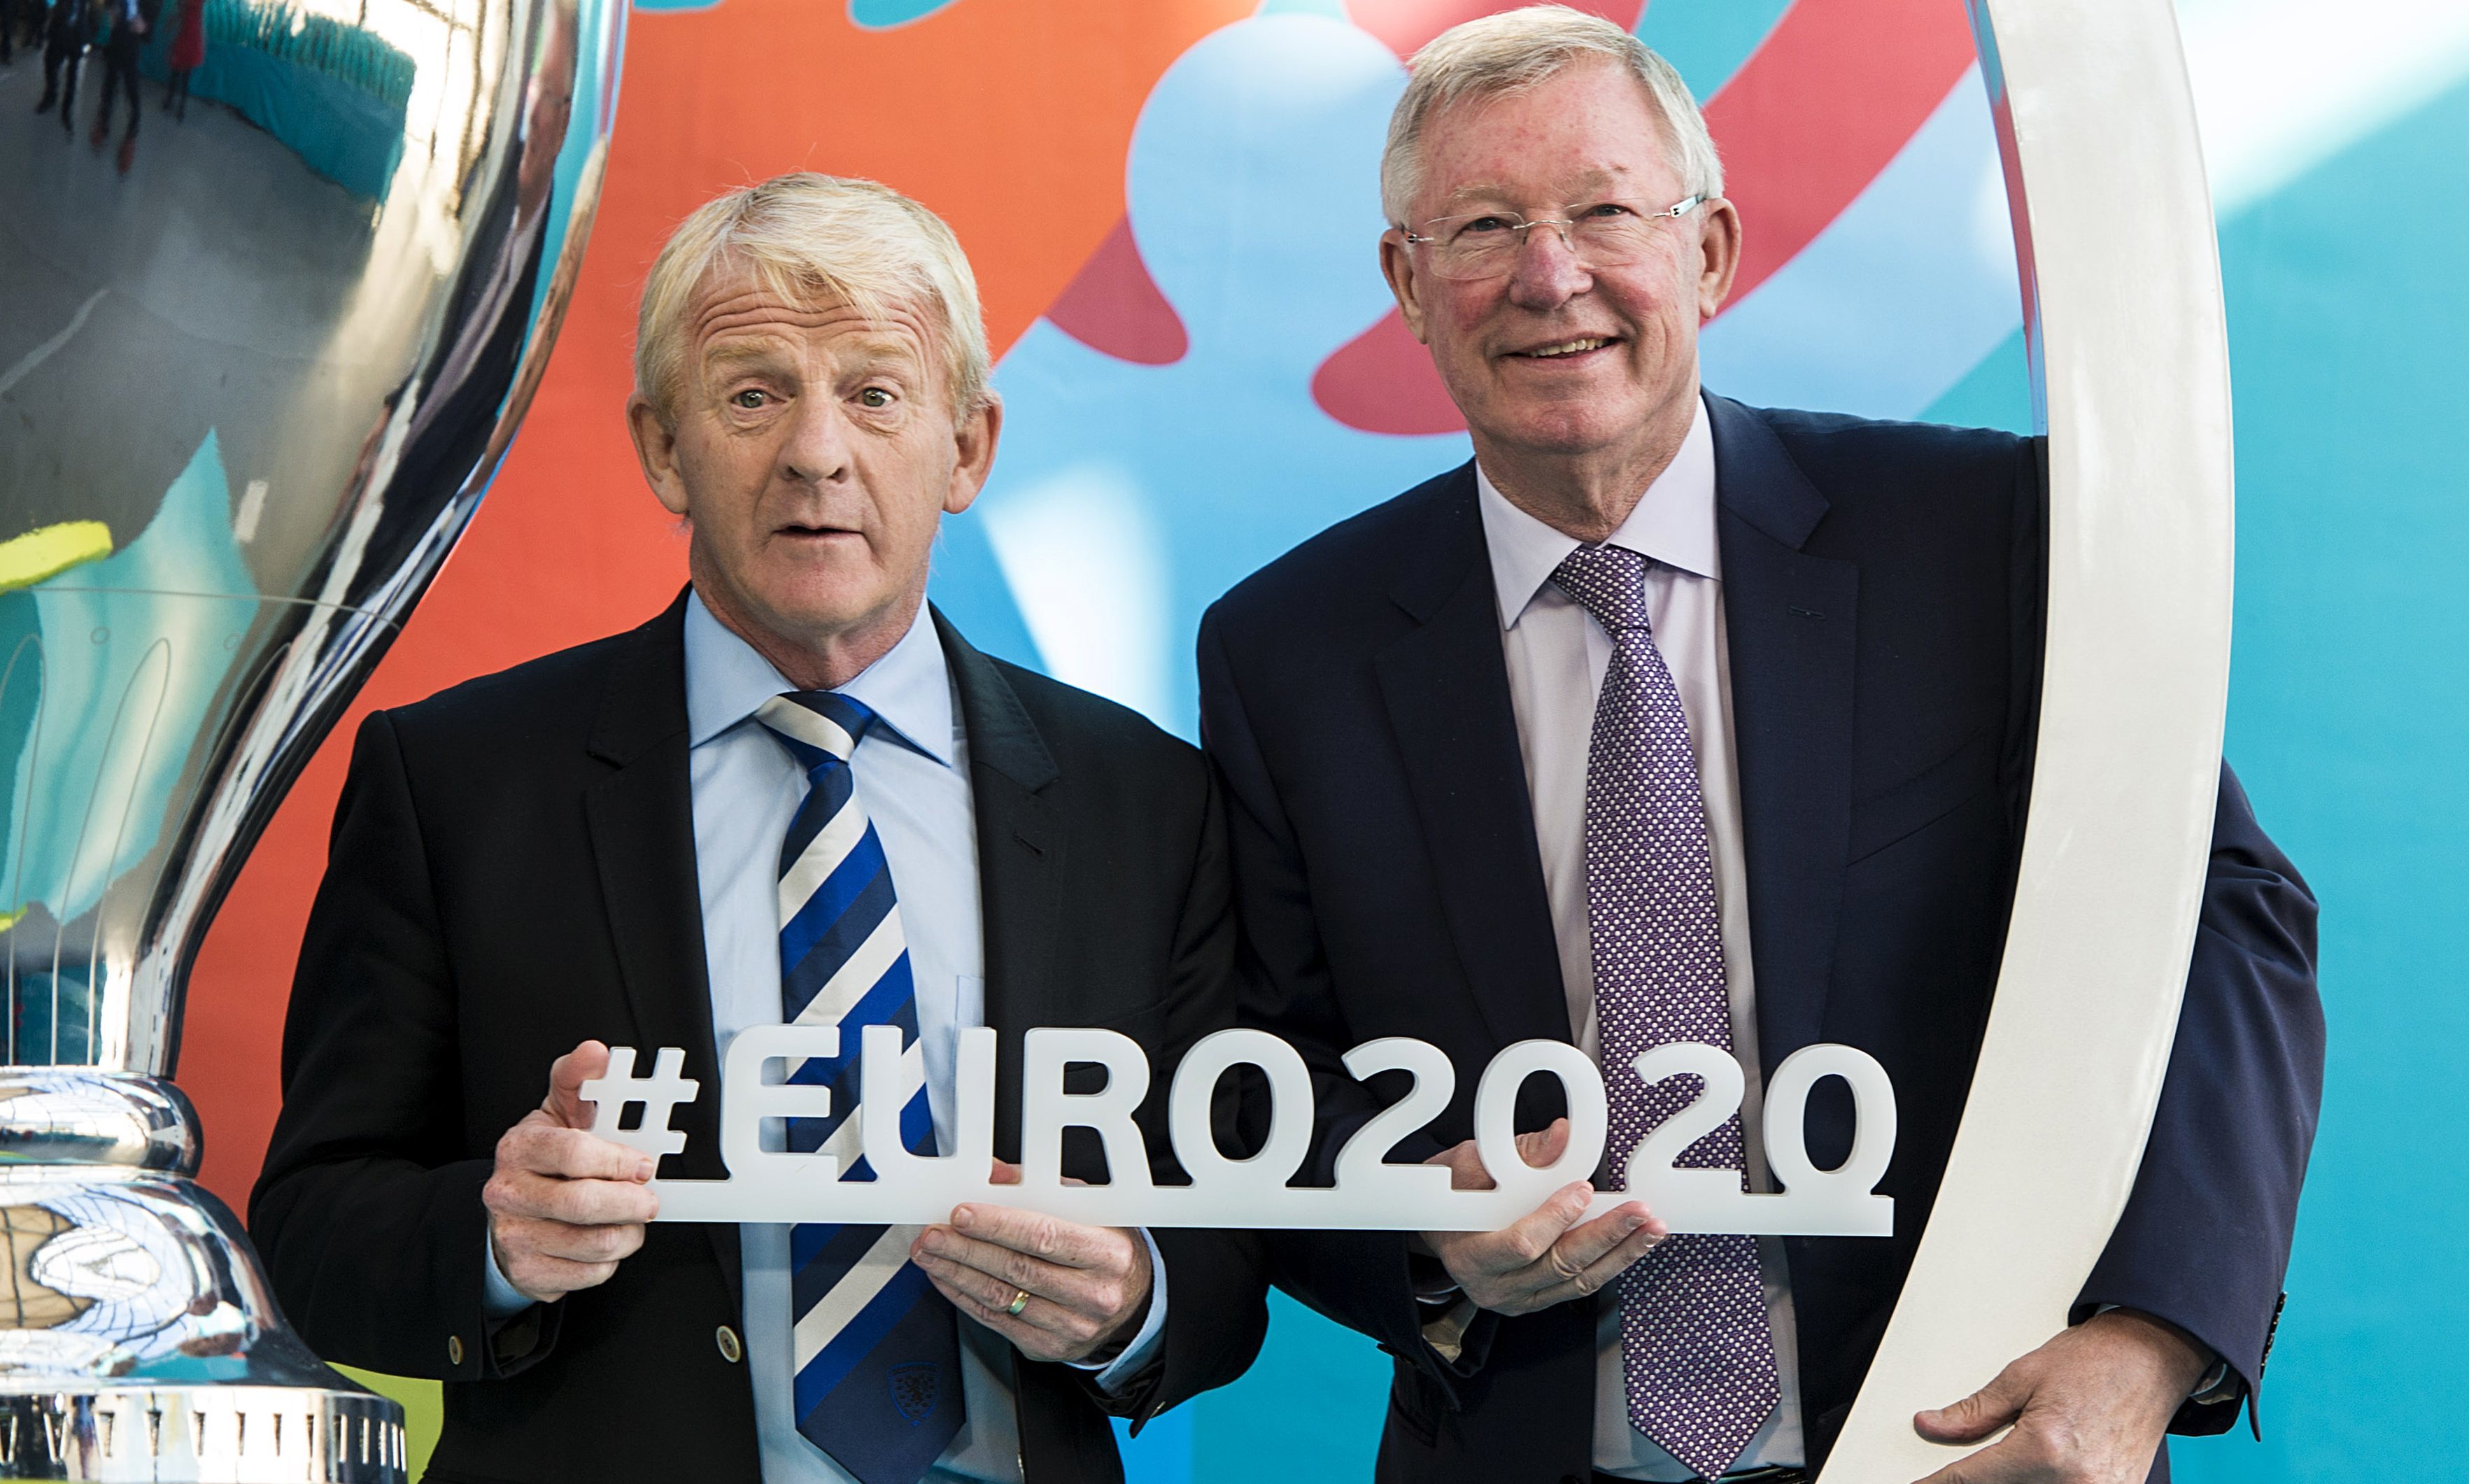 Scotland manager Gordon Strachan (L) and Sir Alex Ferguson at the Glasgow 2020 logo launch.